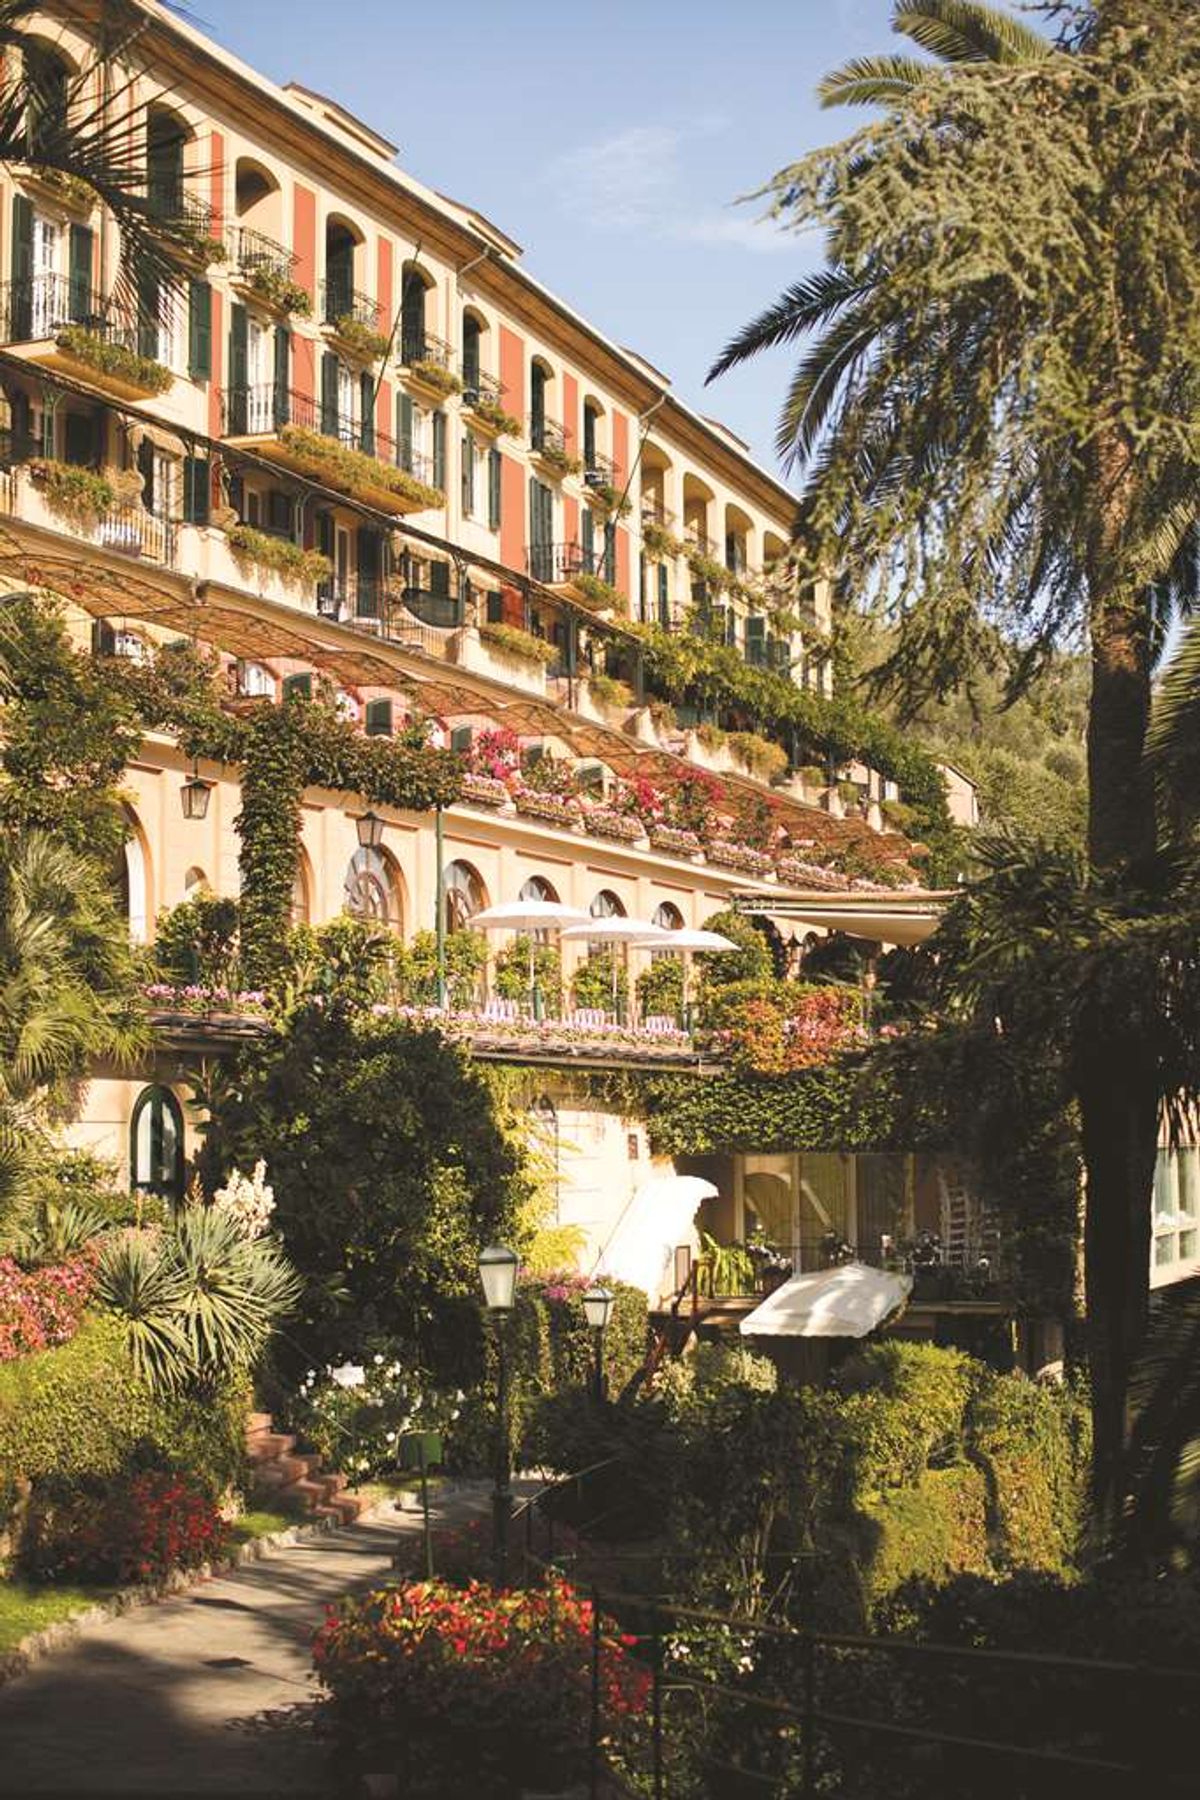 Belmond Hotel Splendido: Luxury Resort in Portofino